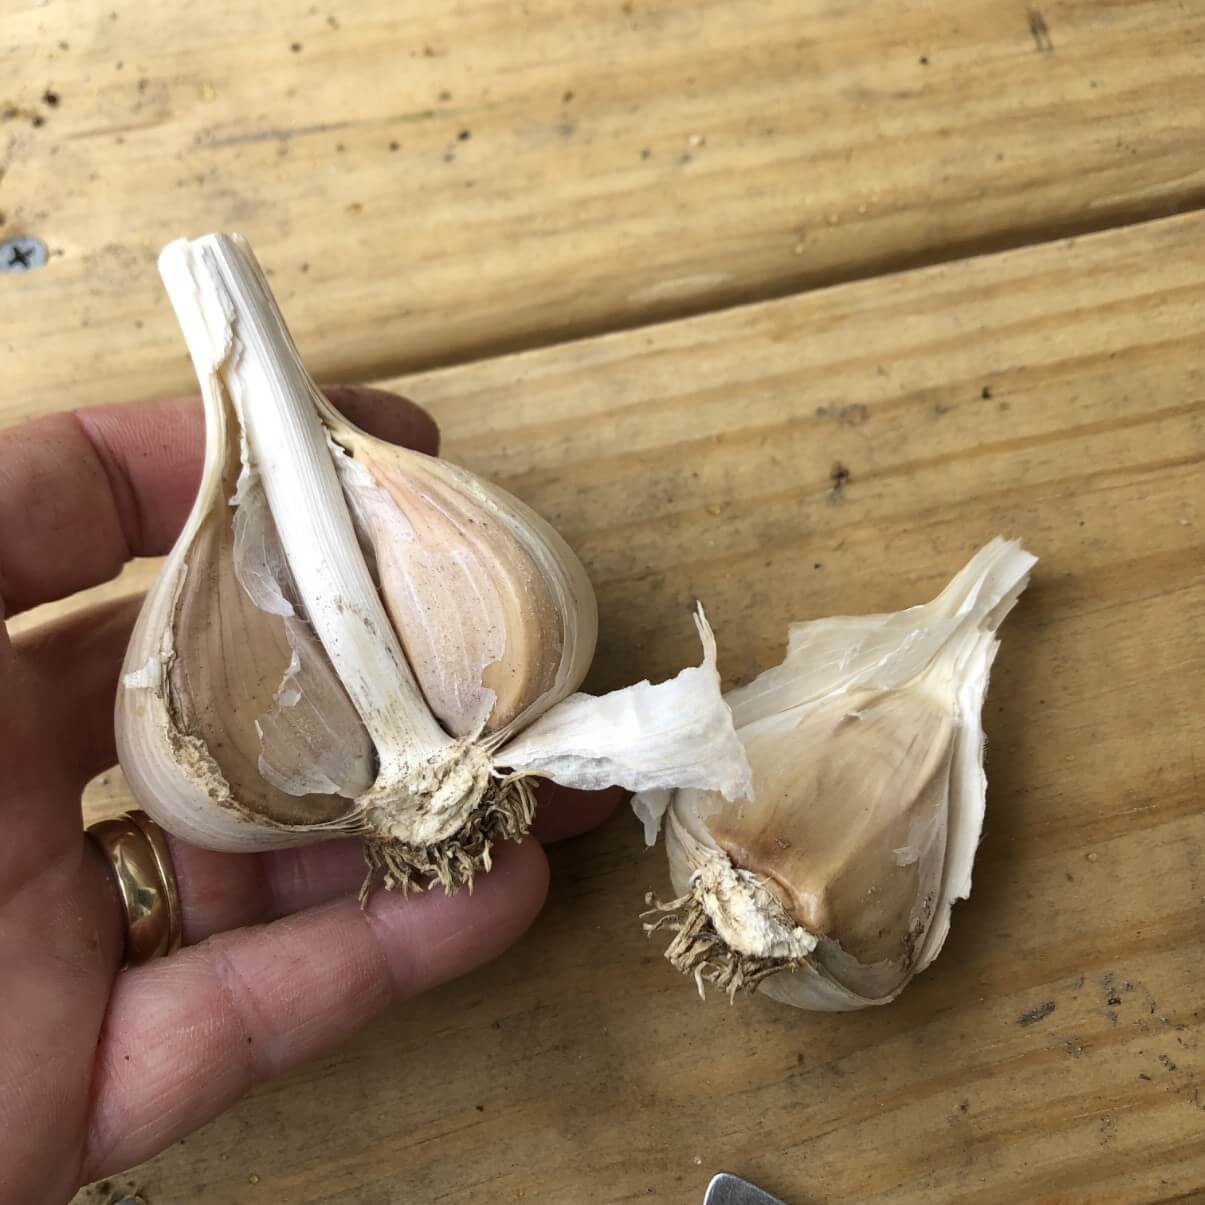 hardneck garlic with cloves separated showing hard middle stem